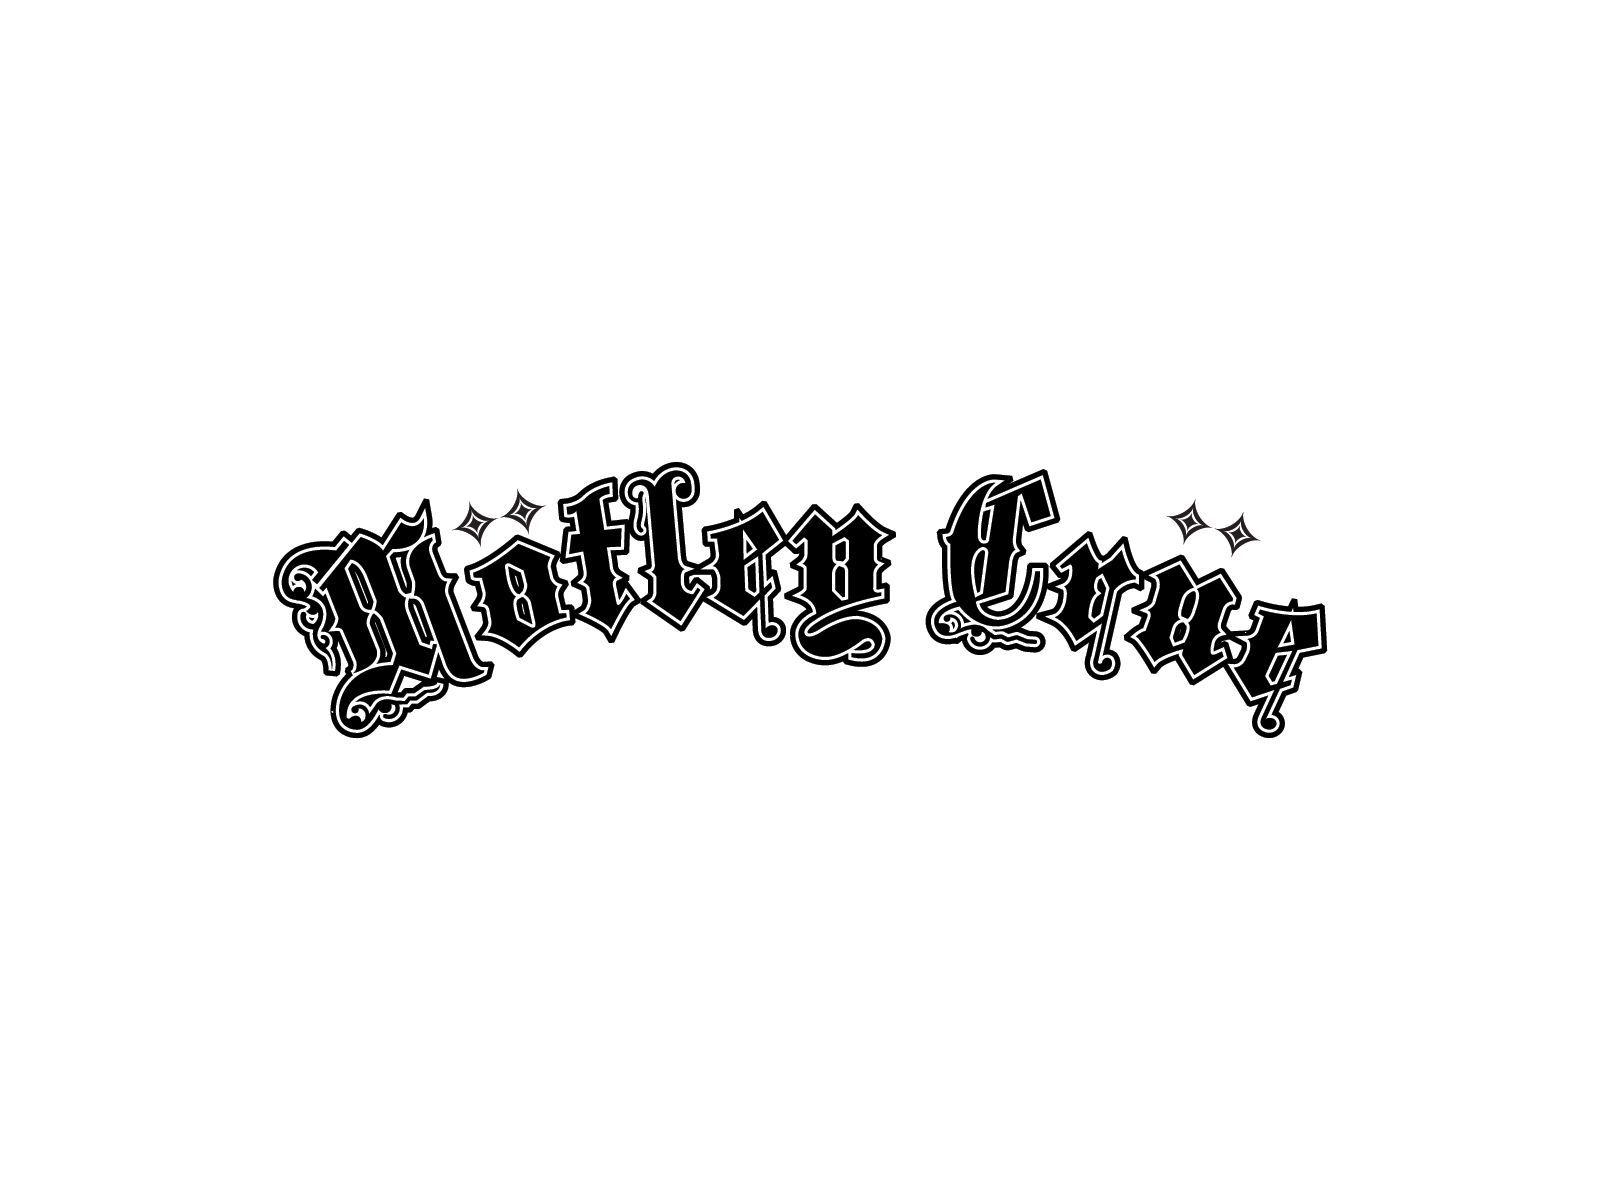 Motley Crue Logo - Motley Crue logo and wallpapers | Motley Crue | Band logos, Rock ...